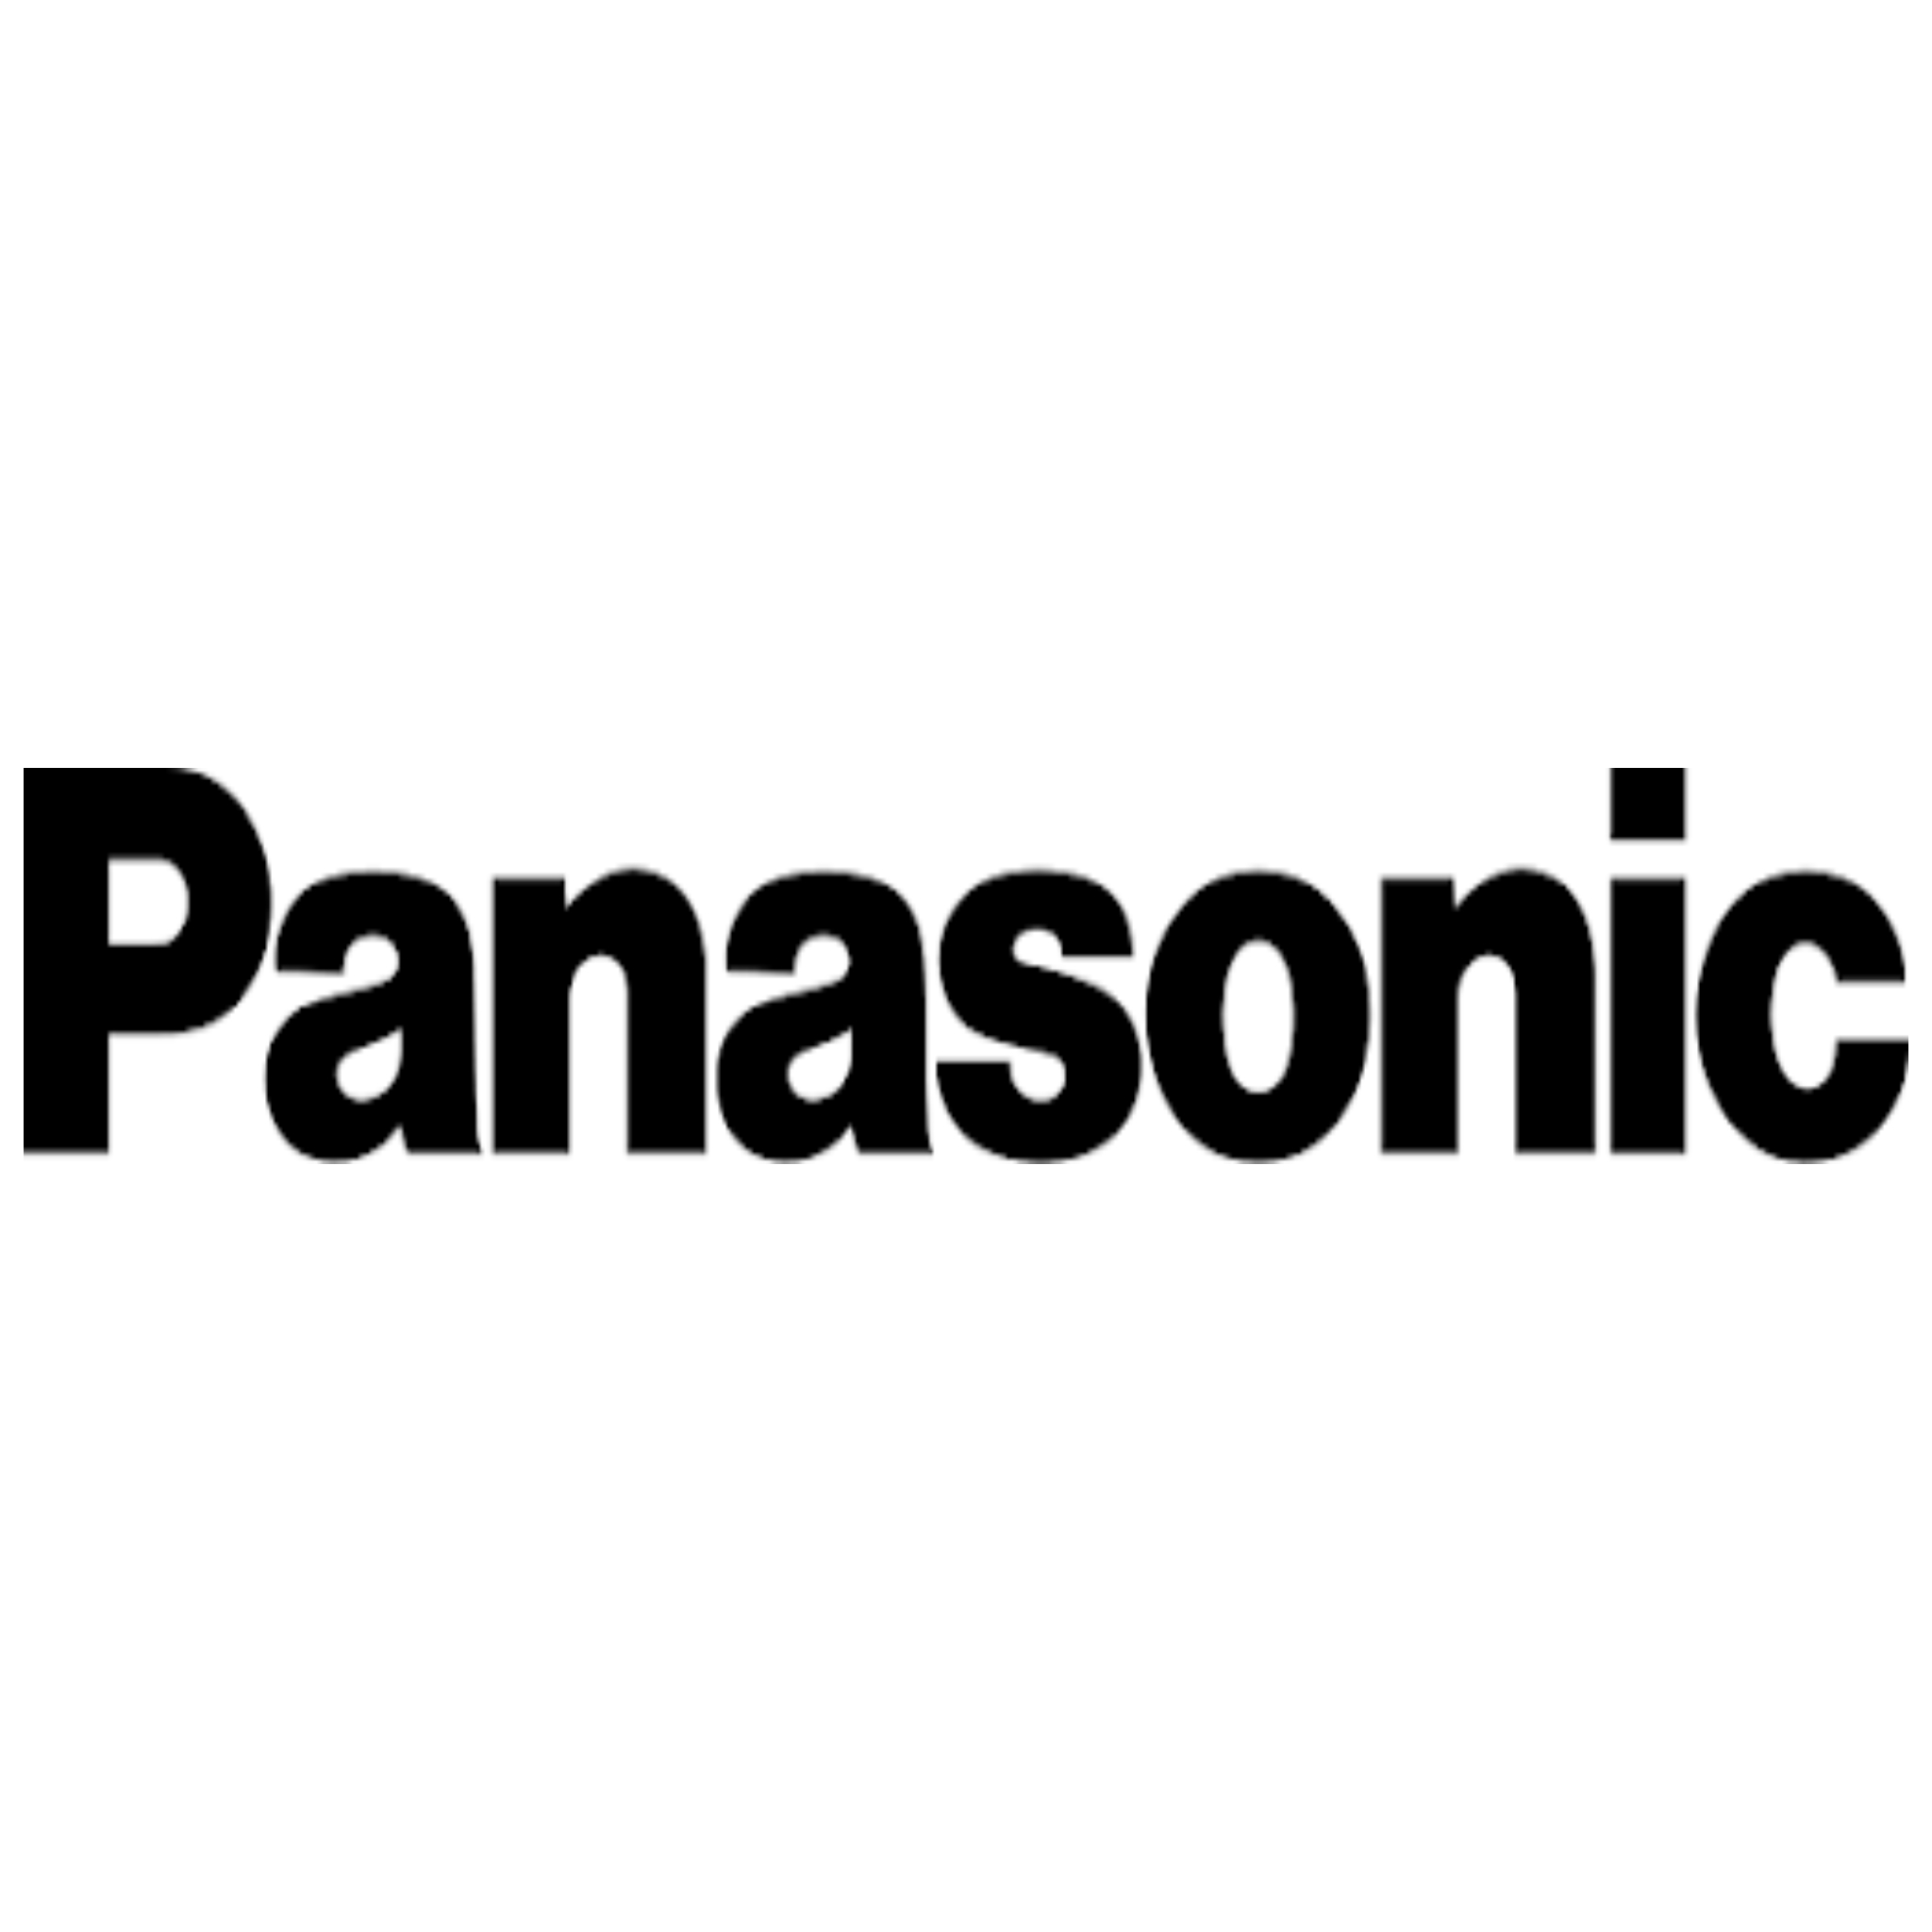 Panasonic urges people to build new bonds this Diwali, says ‘Iss Tyohaar Jatao Pyaar’-thumnail